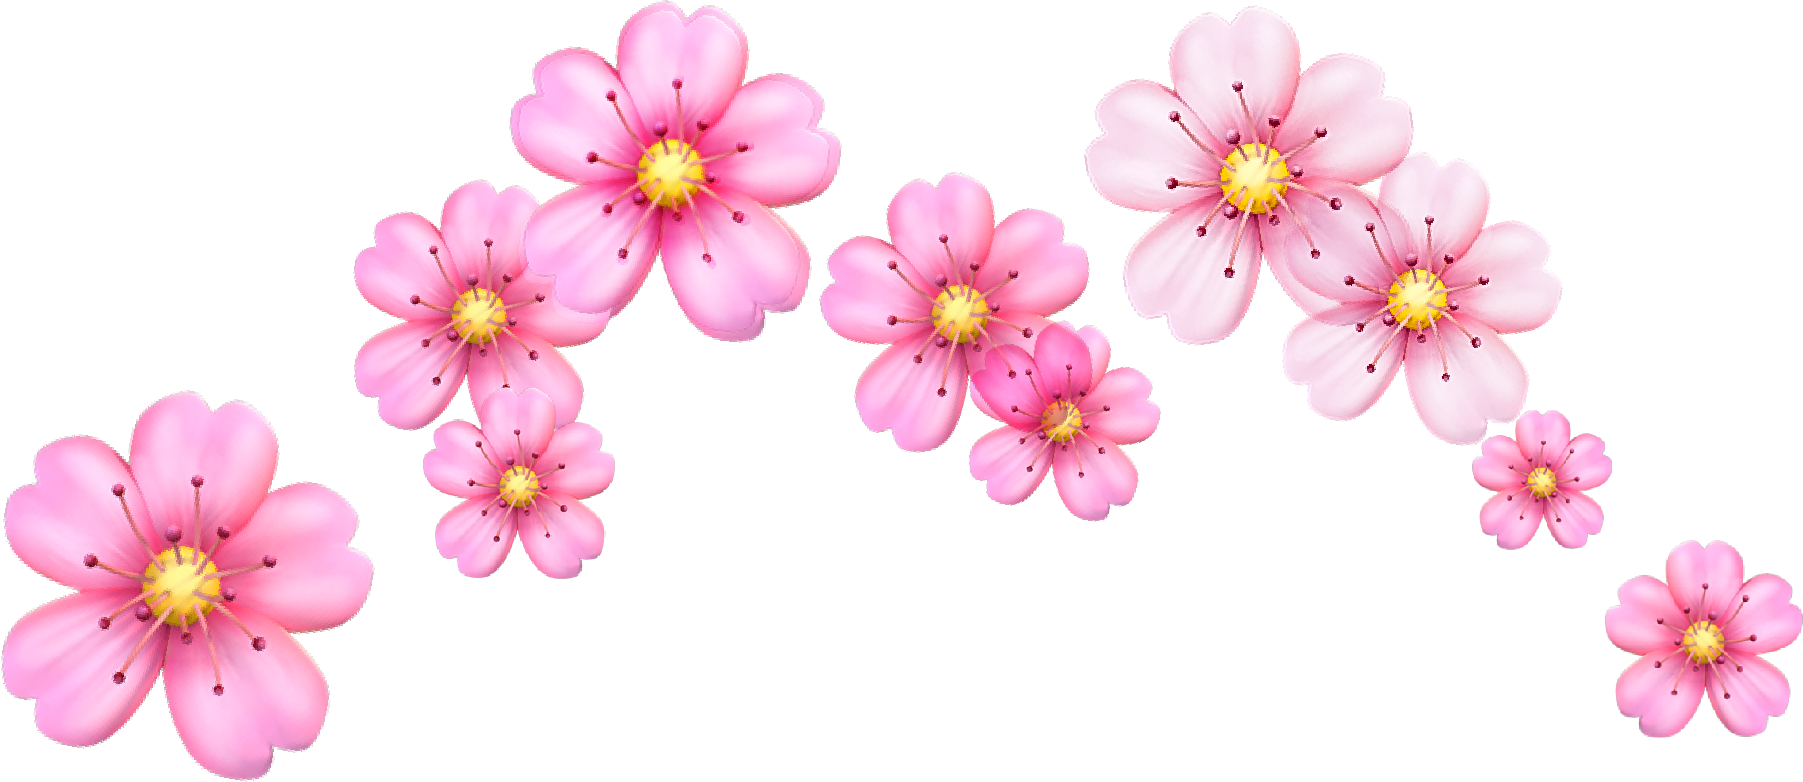 Crown Crownflower Flower Flowercrown Cherry Cherrybloss - Crown Crownflower Flower Flowercrown Cherry Cherrybloss (1803x782)